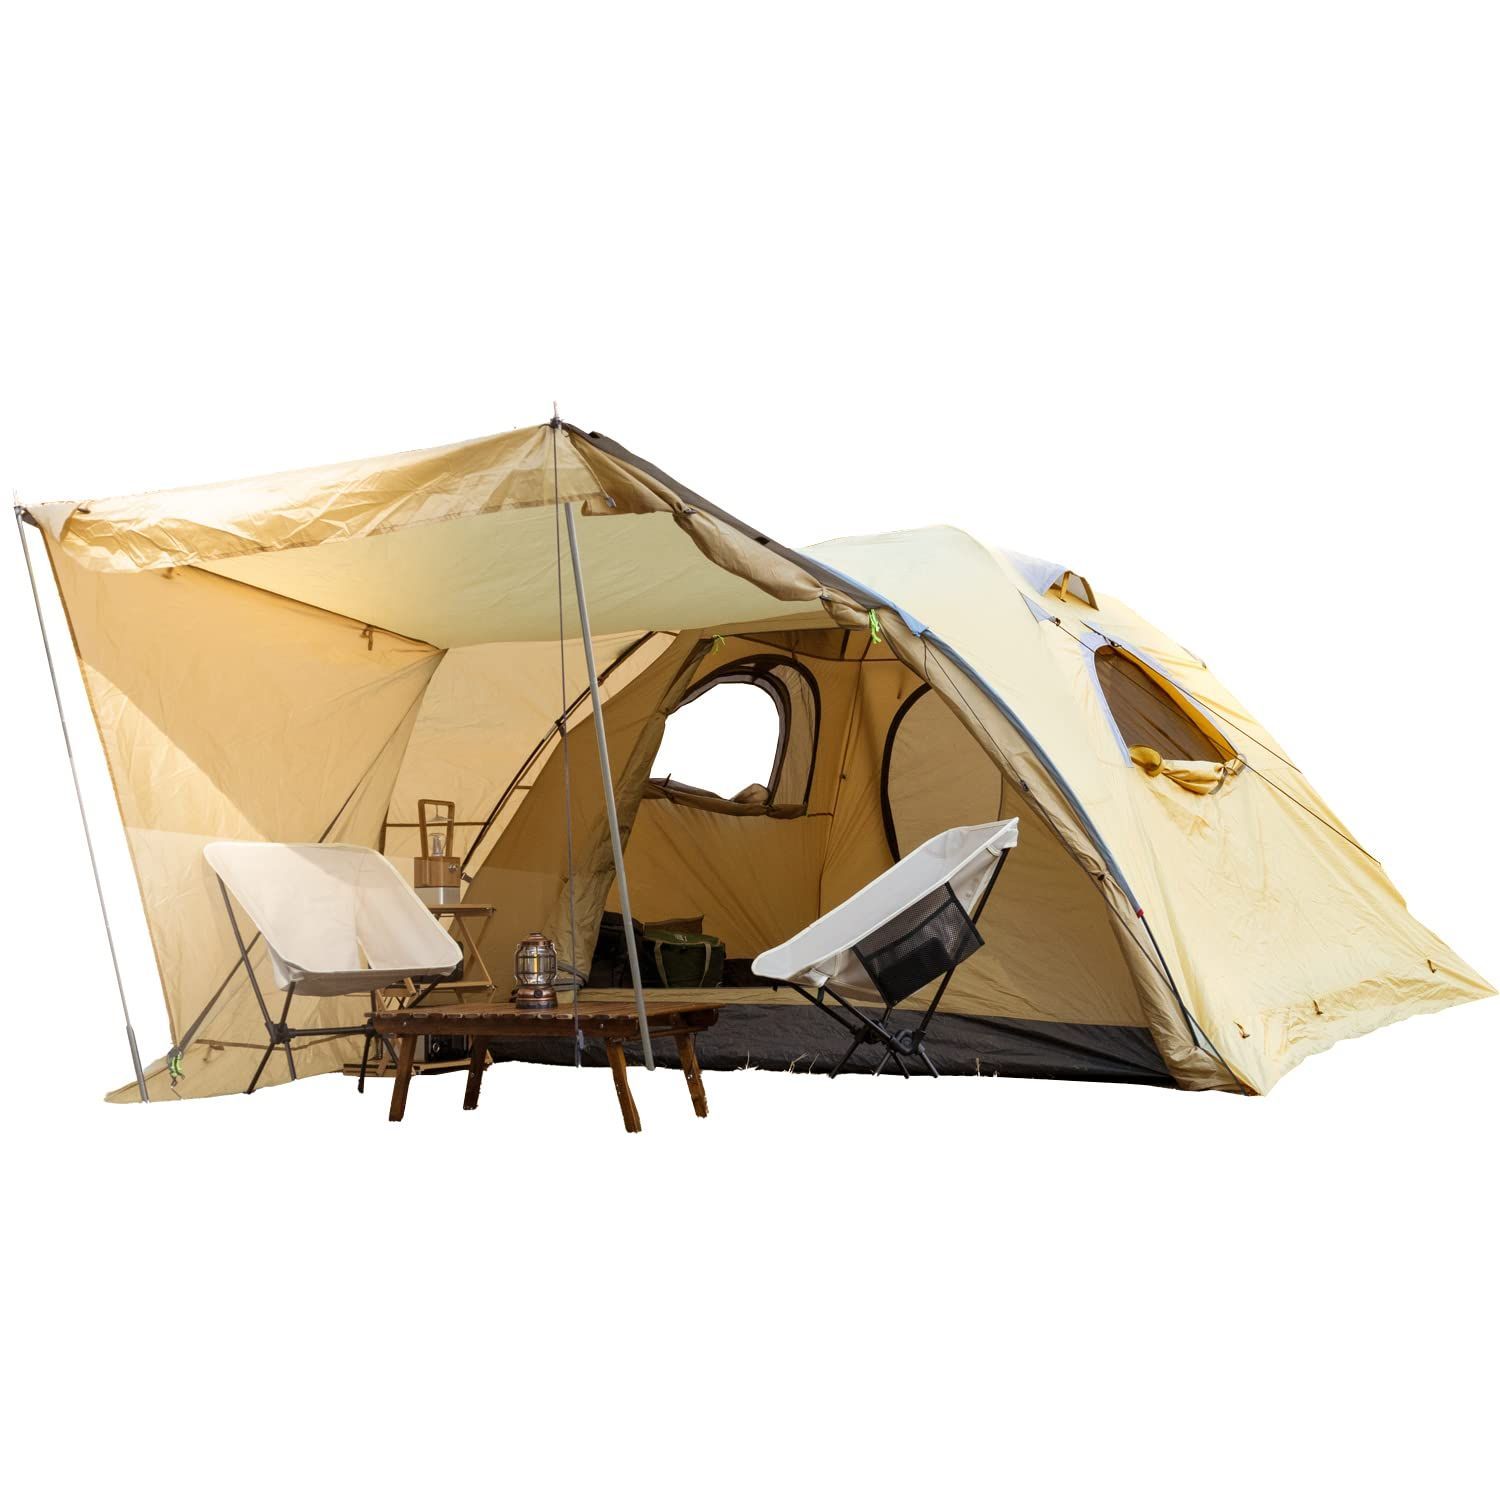 ENDLESS-BASE テント 4-5人用 幅275 キャノピーテント UVカット 耐水 